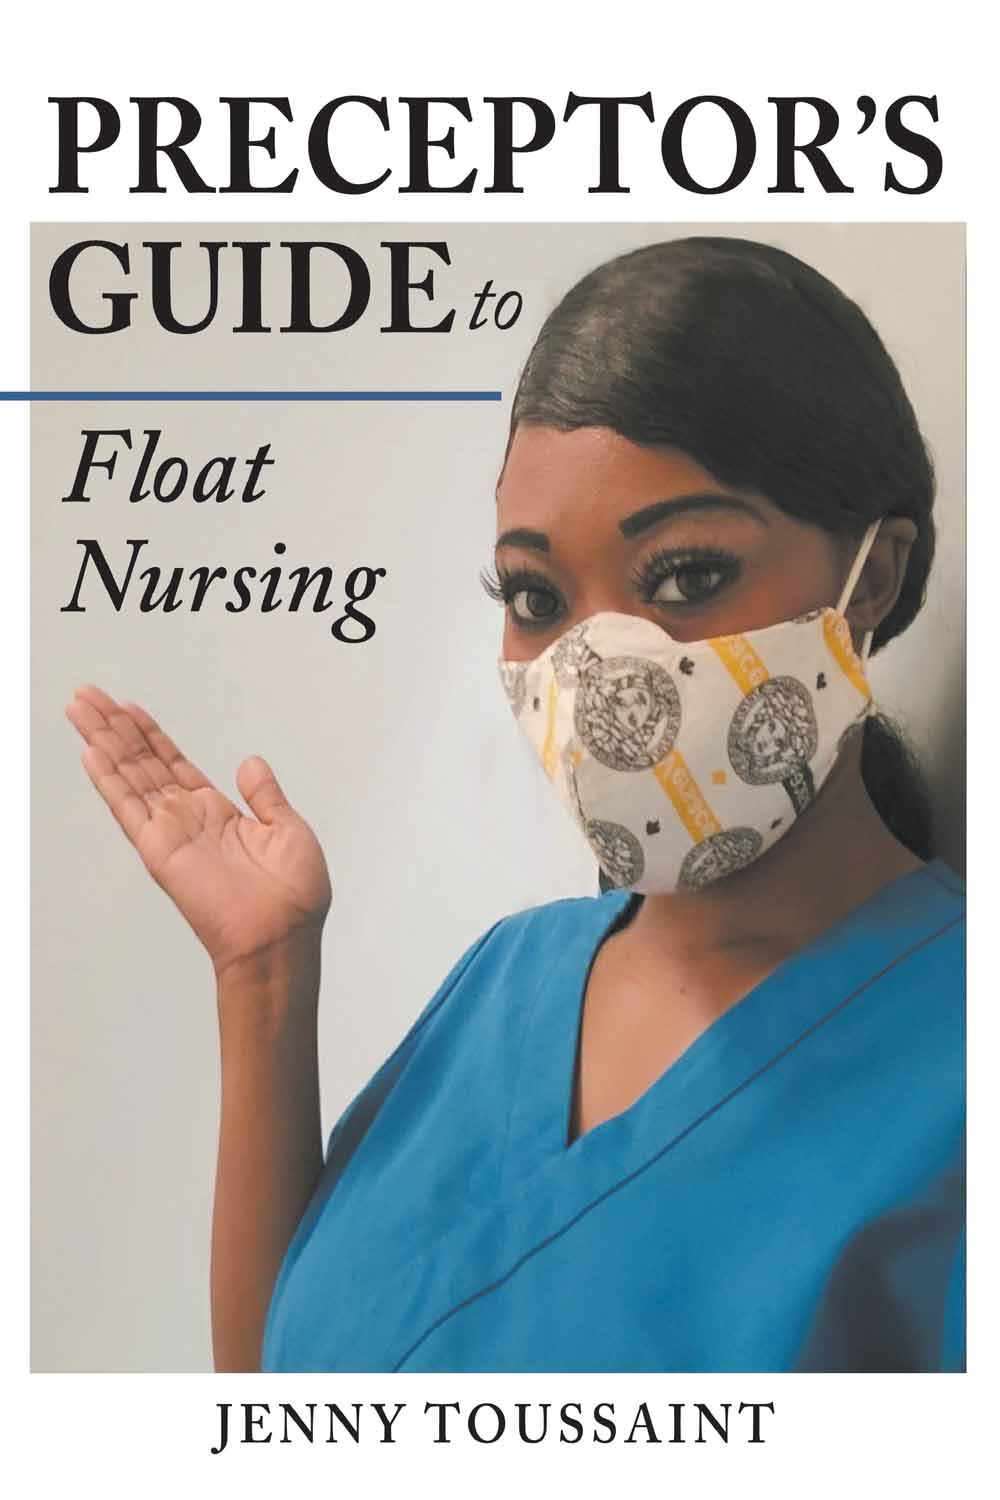 Preceptor's Guide to Float Nursing